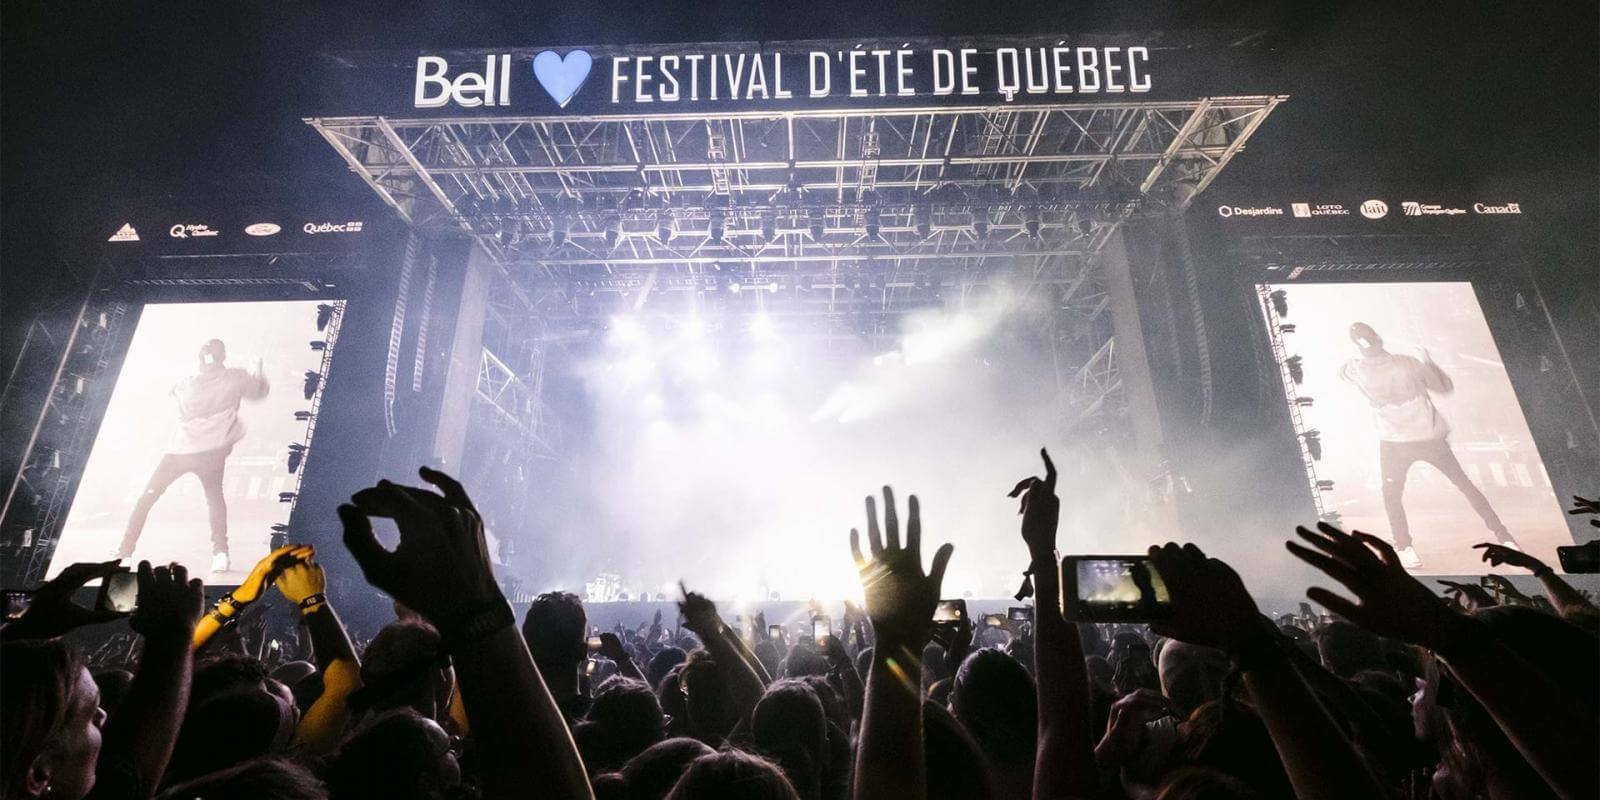 Annual Calendar of Festivals | Visit Québec City